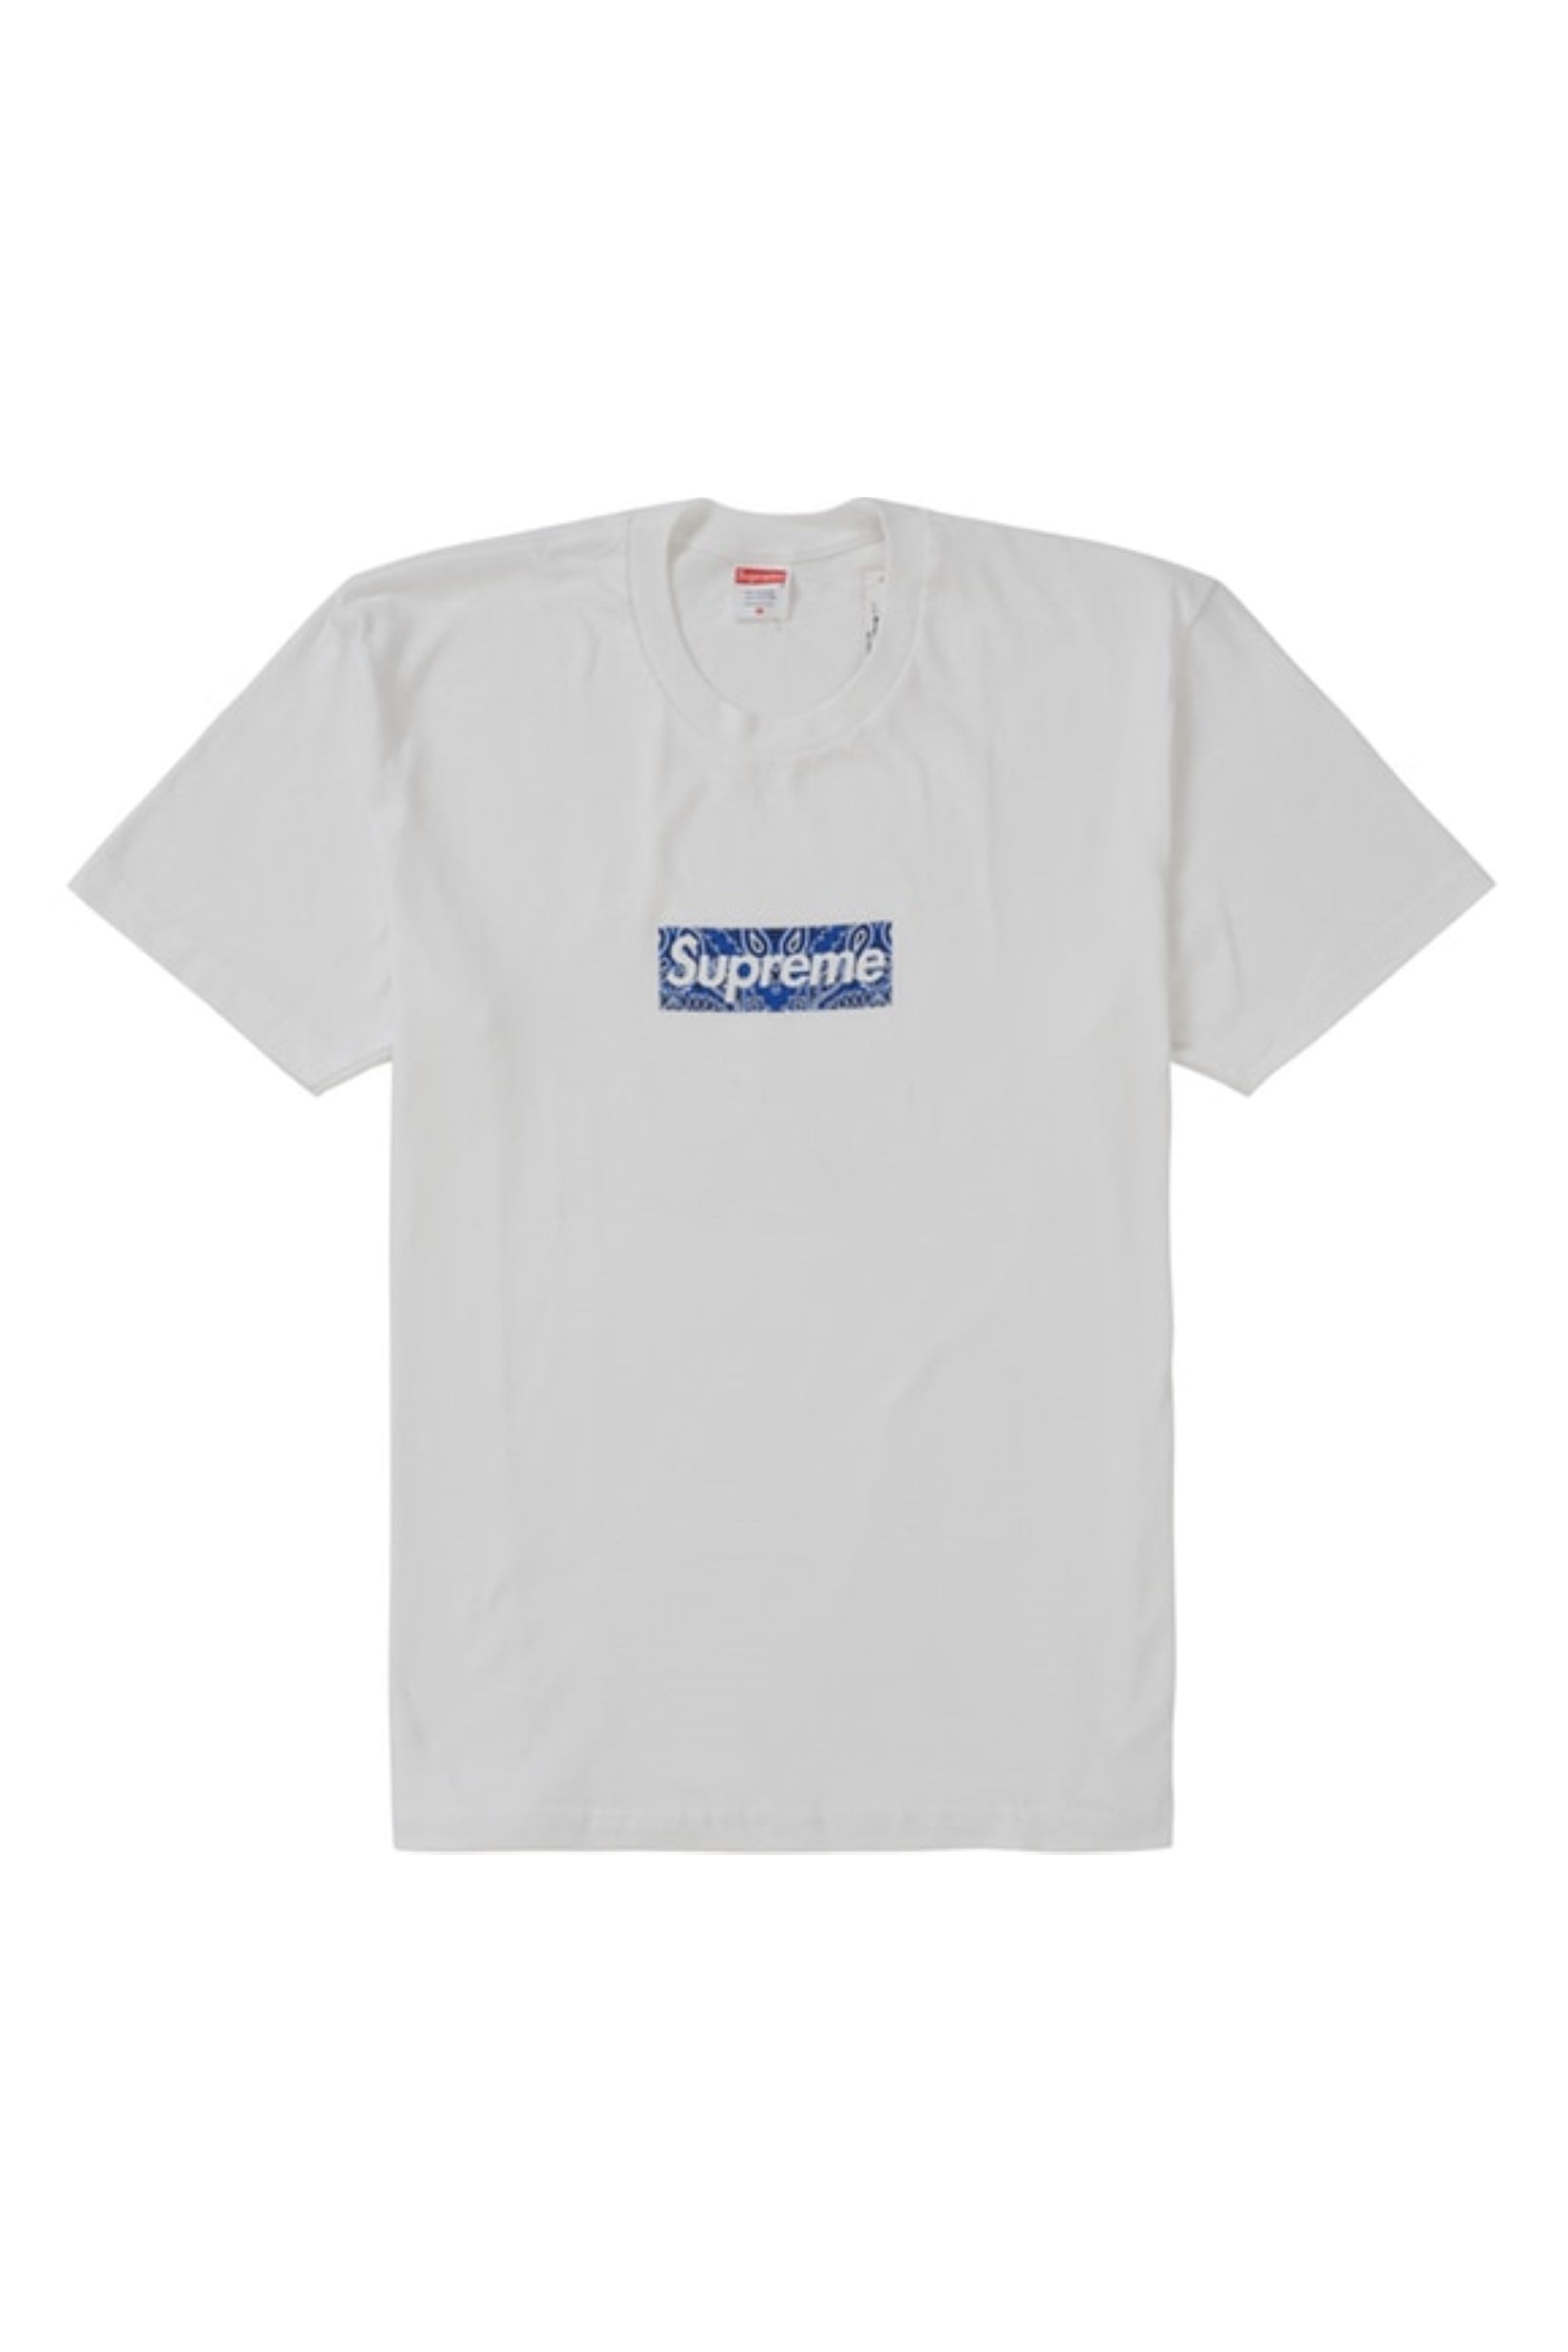 Supreme Box Logo Shirt Retail Price Shop, 57% OFF | www.hcb.cat